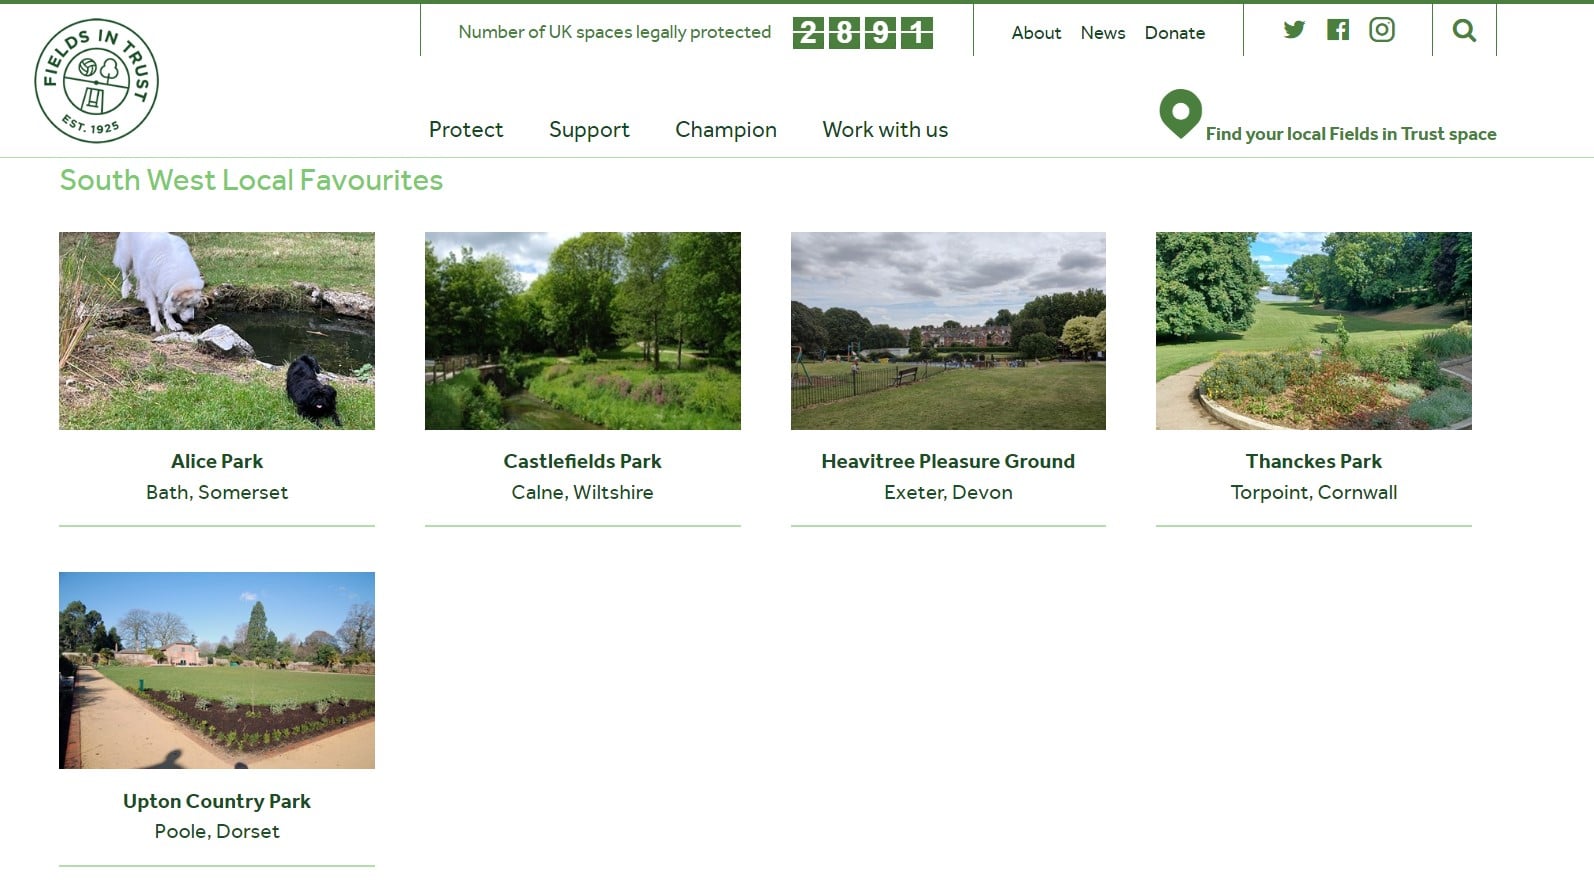 Visit www.fieldsintrust.org/favourite-parks/local-favourites